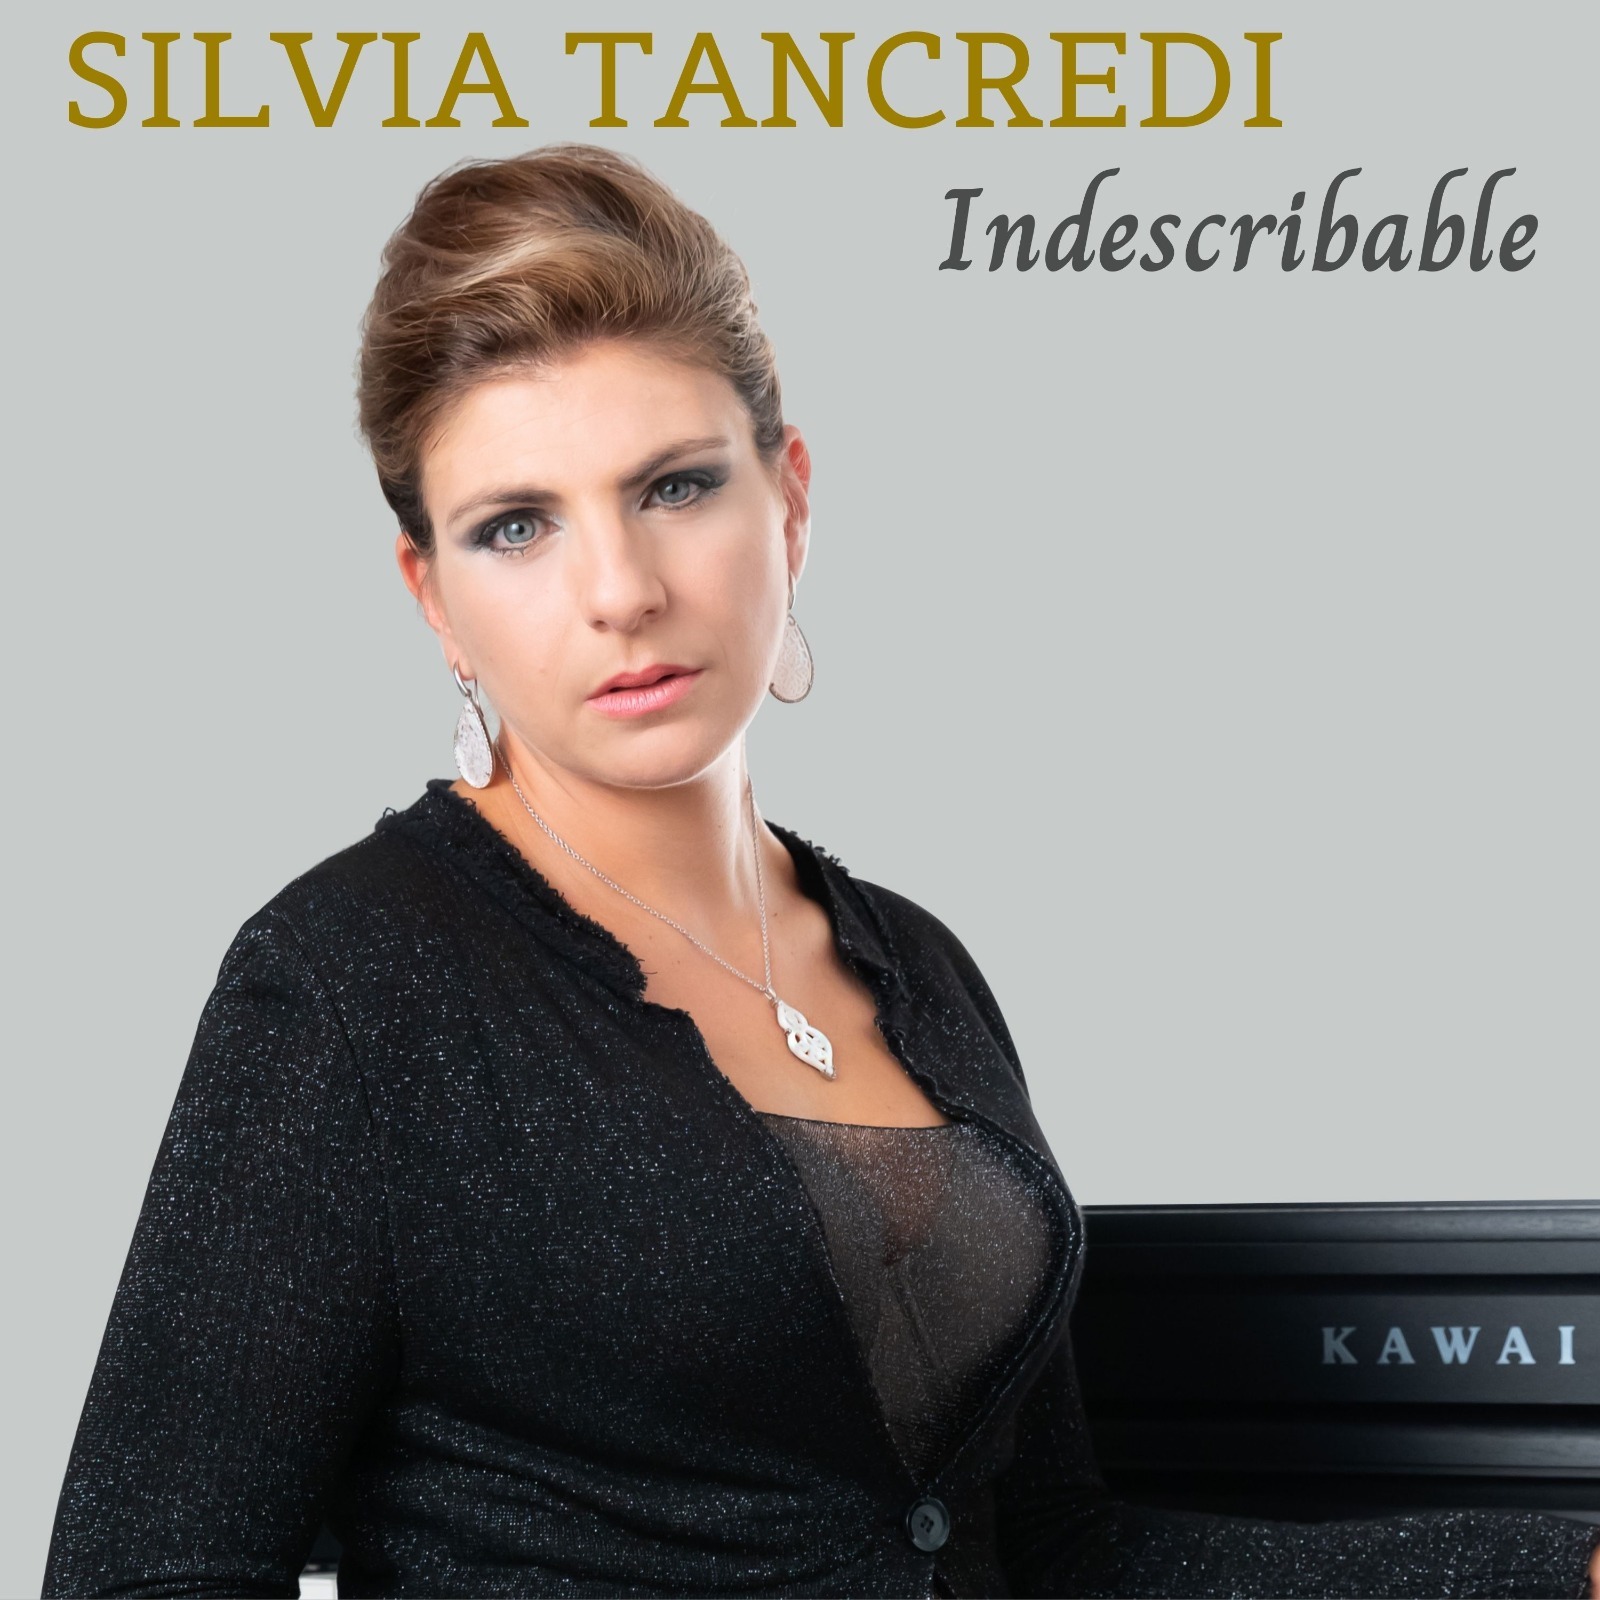 Silvia Tancredi - Indescribable